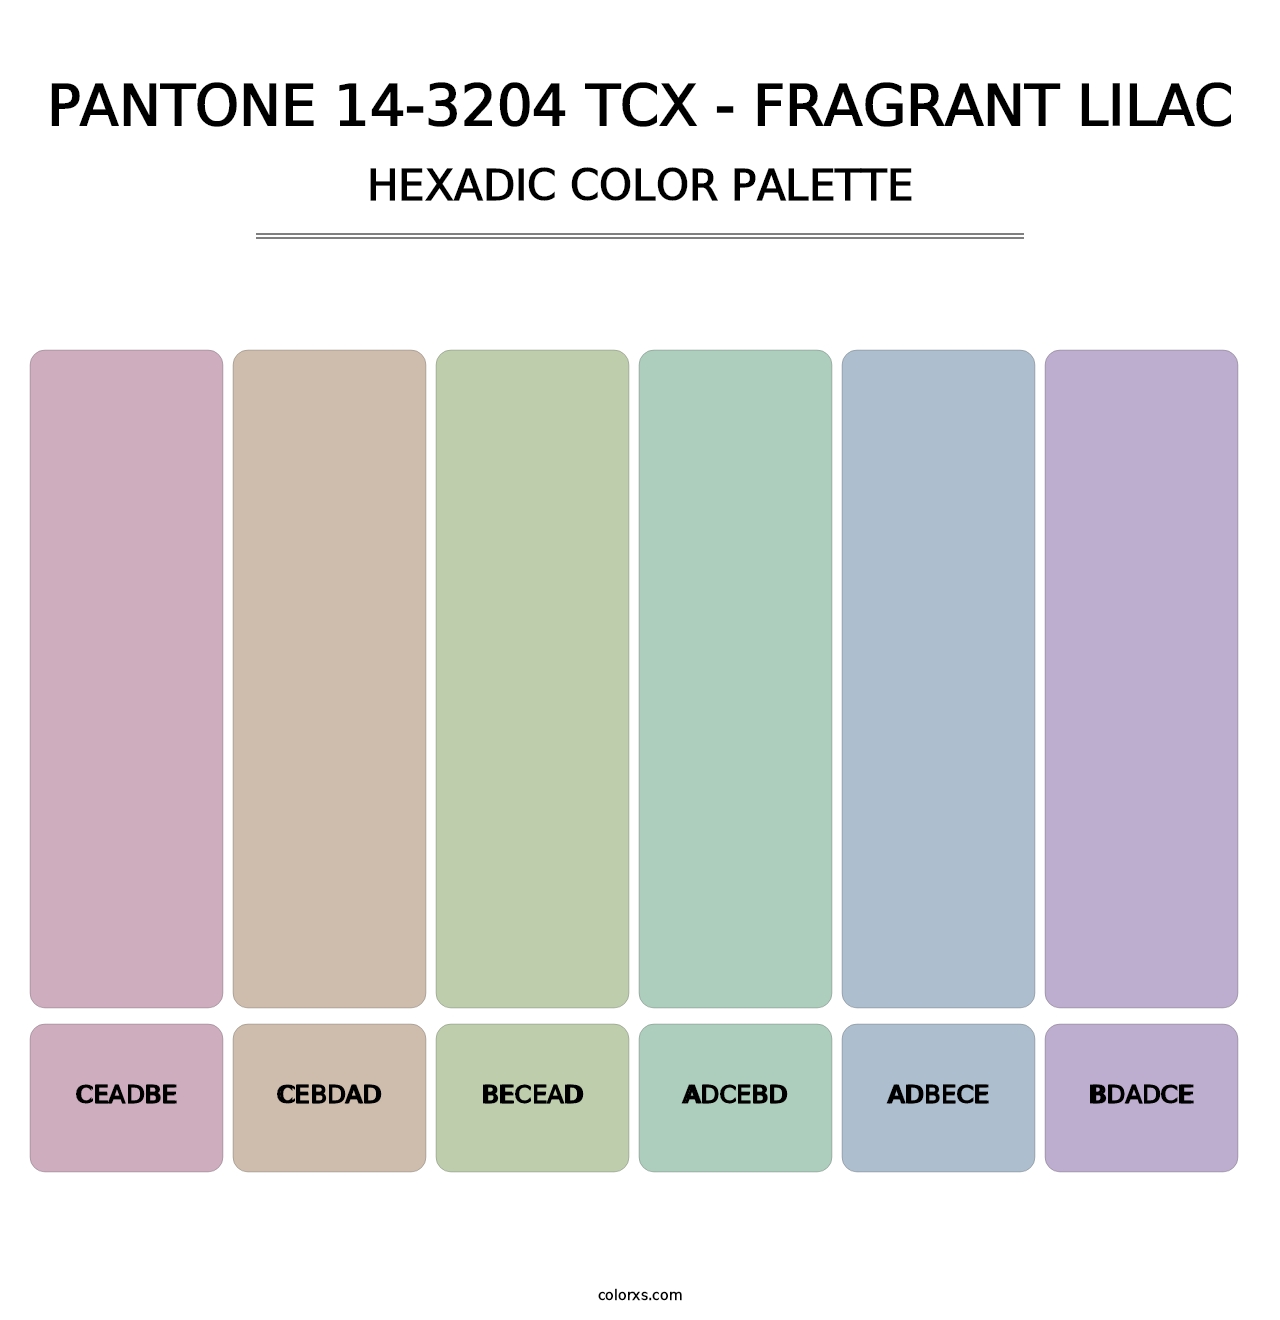 PANTONE 14-3204 TCX - Fragrant Lilac - Hexadic Color Palette